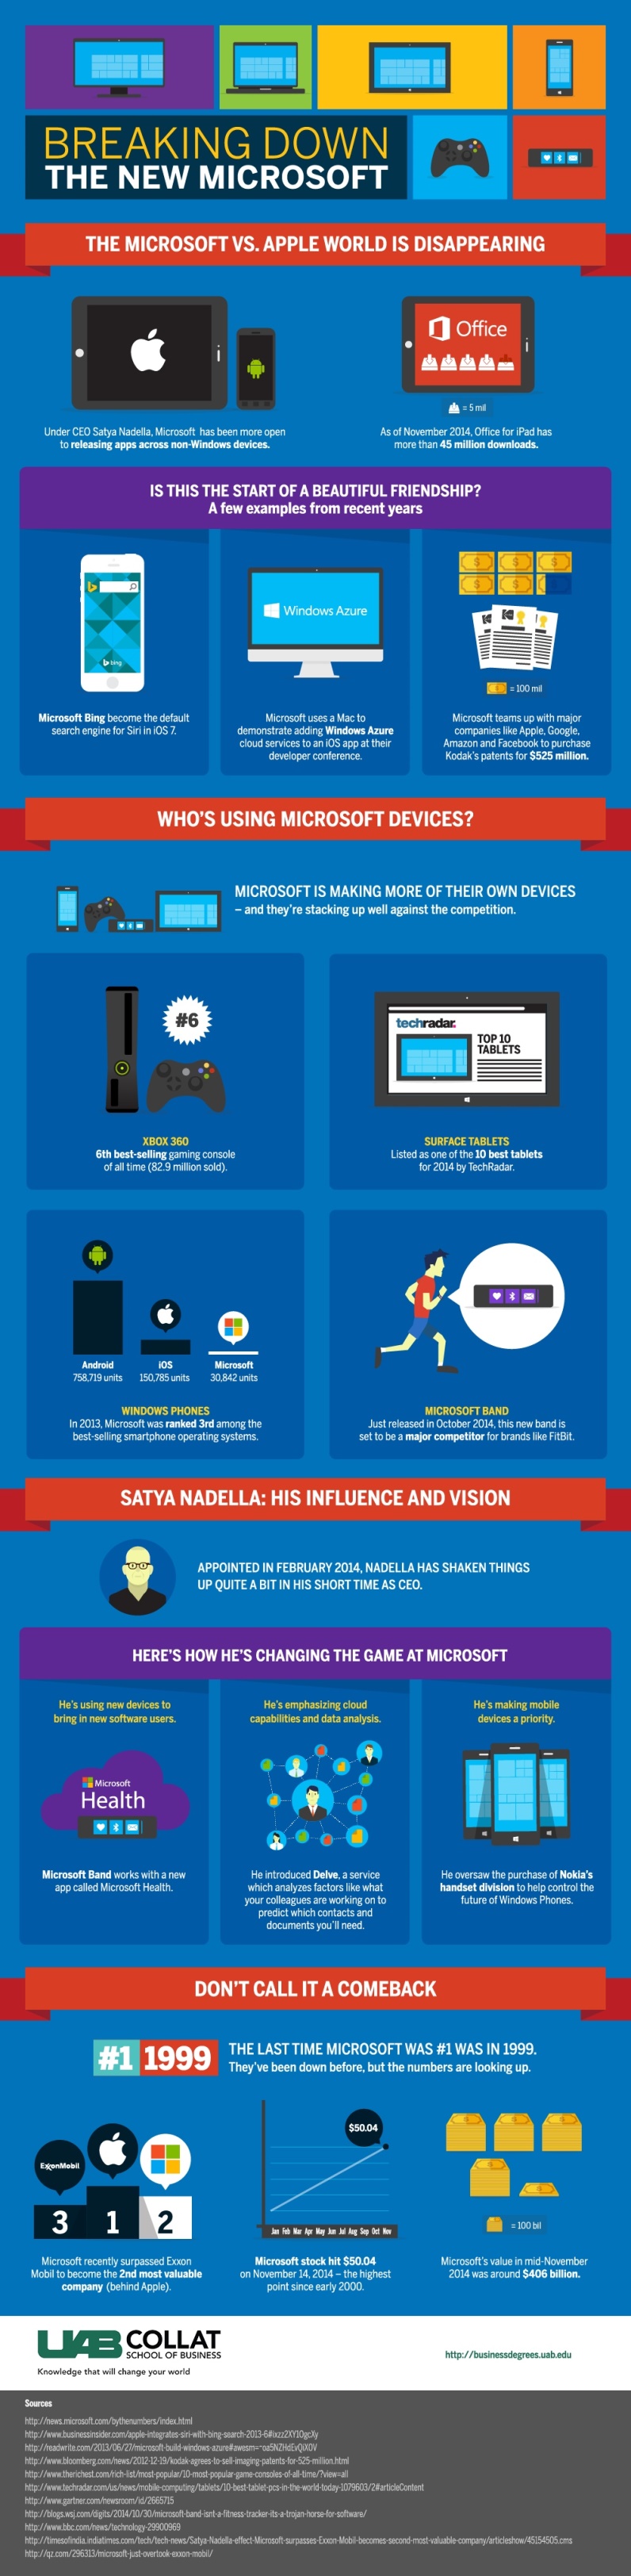 Microsoft 2.0 - A New Company Under Satya Nadella